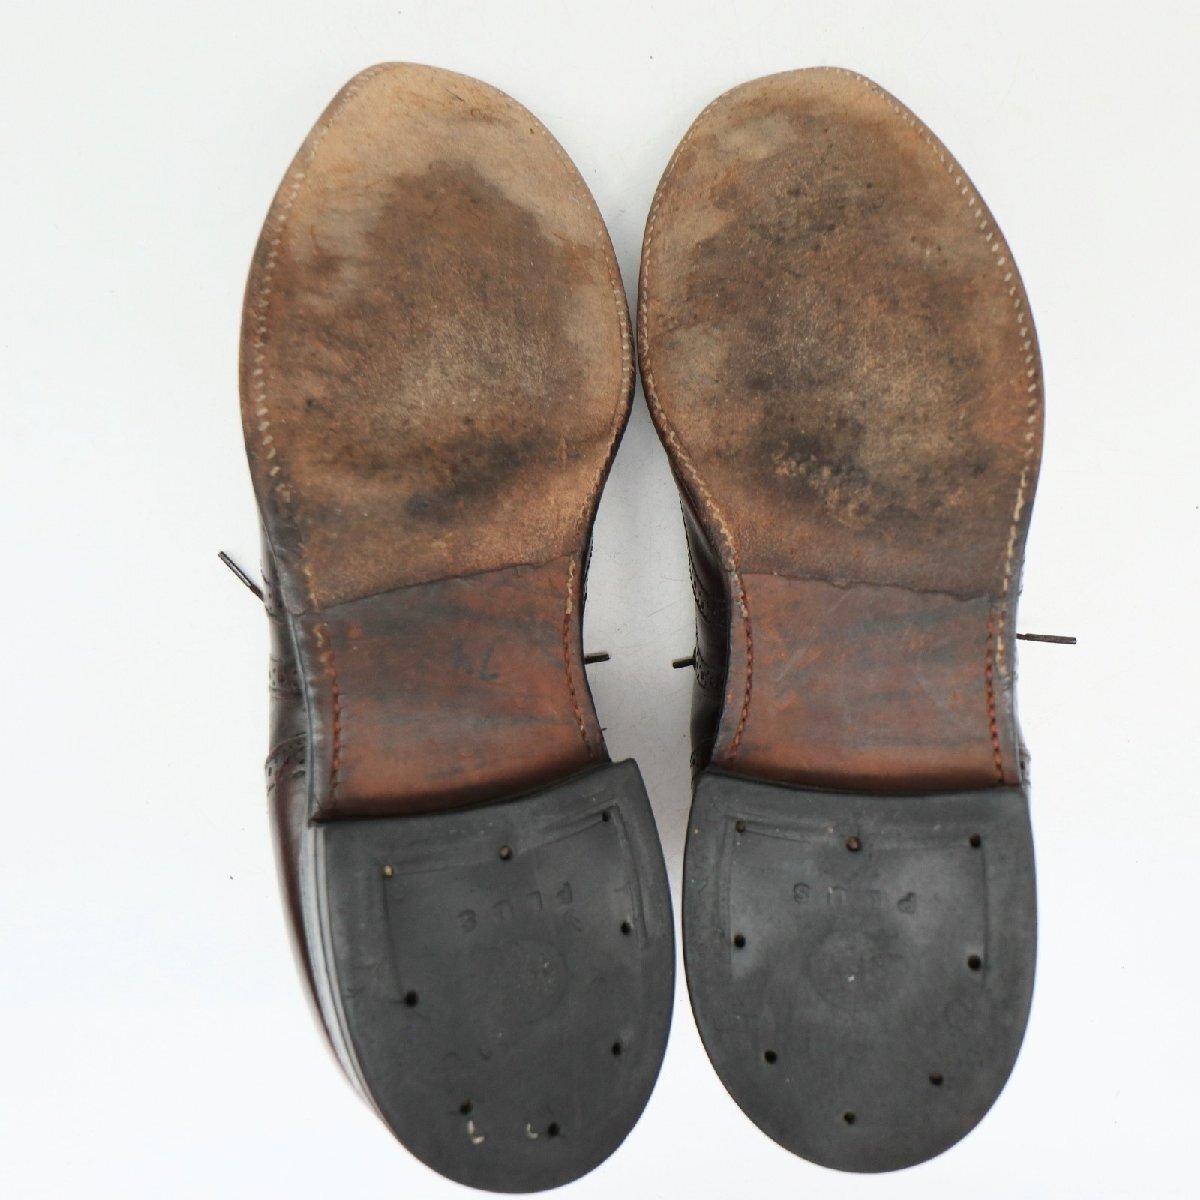 UNKNOWN ウイングチップ 内羽根式 牛革 レザーシューズ 靴 バーガンディ ( メンズ 9 1/2 D/B ≒ 27.5cm ) 5/ ka279 1円スタート_画像5